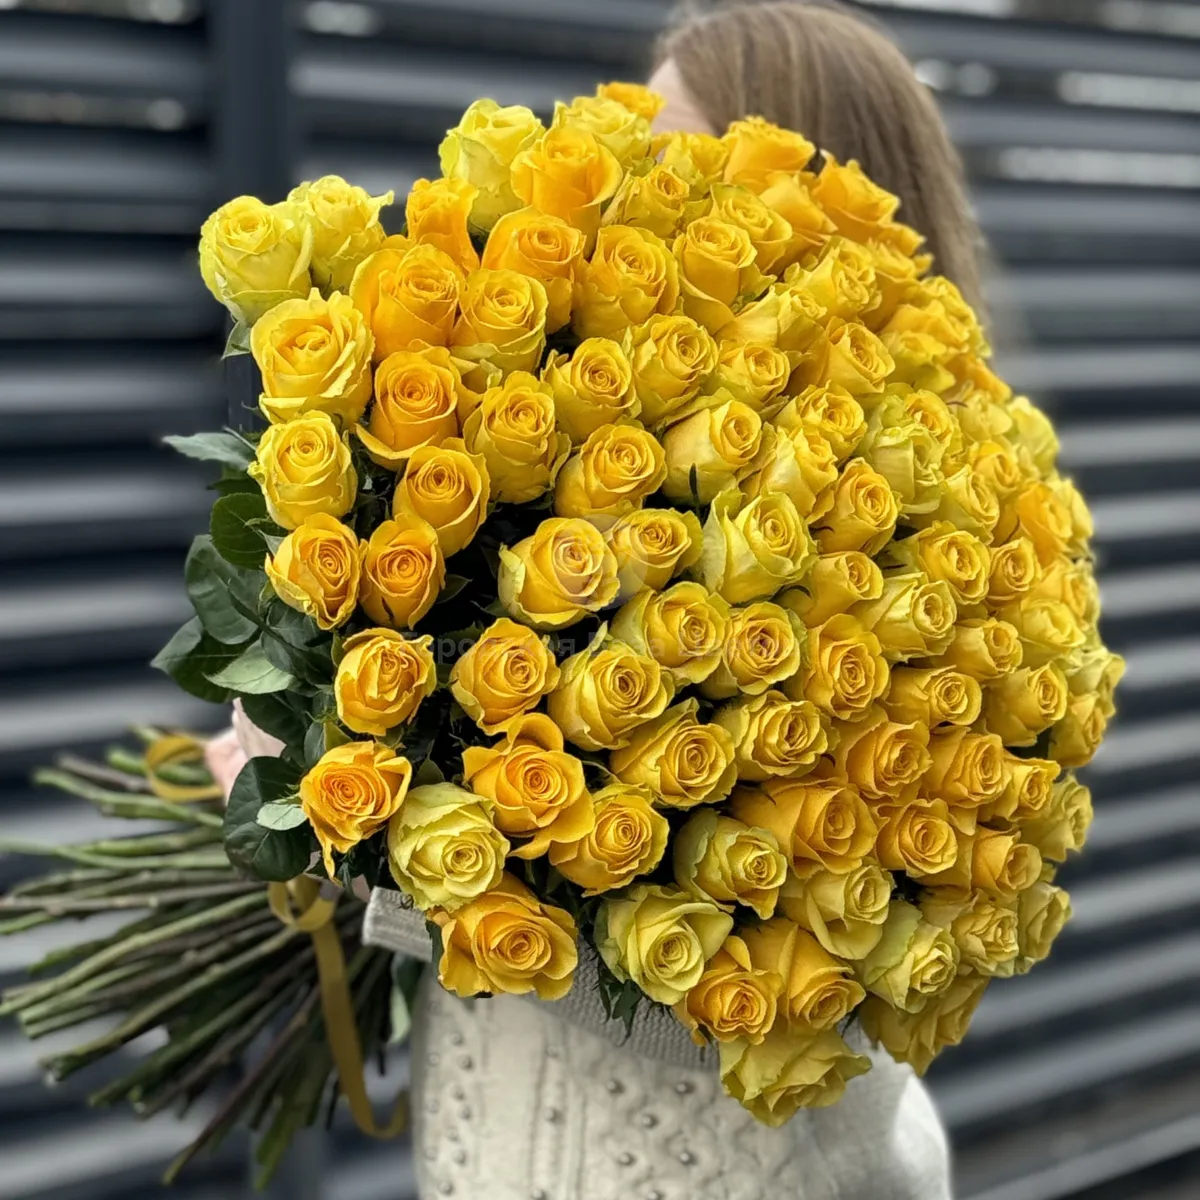 Букет 101 желтая роза эквадор (70см)